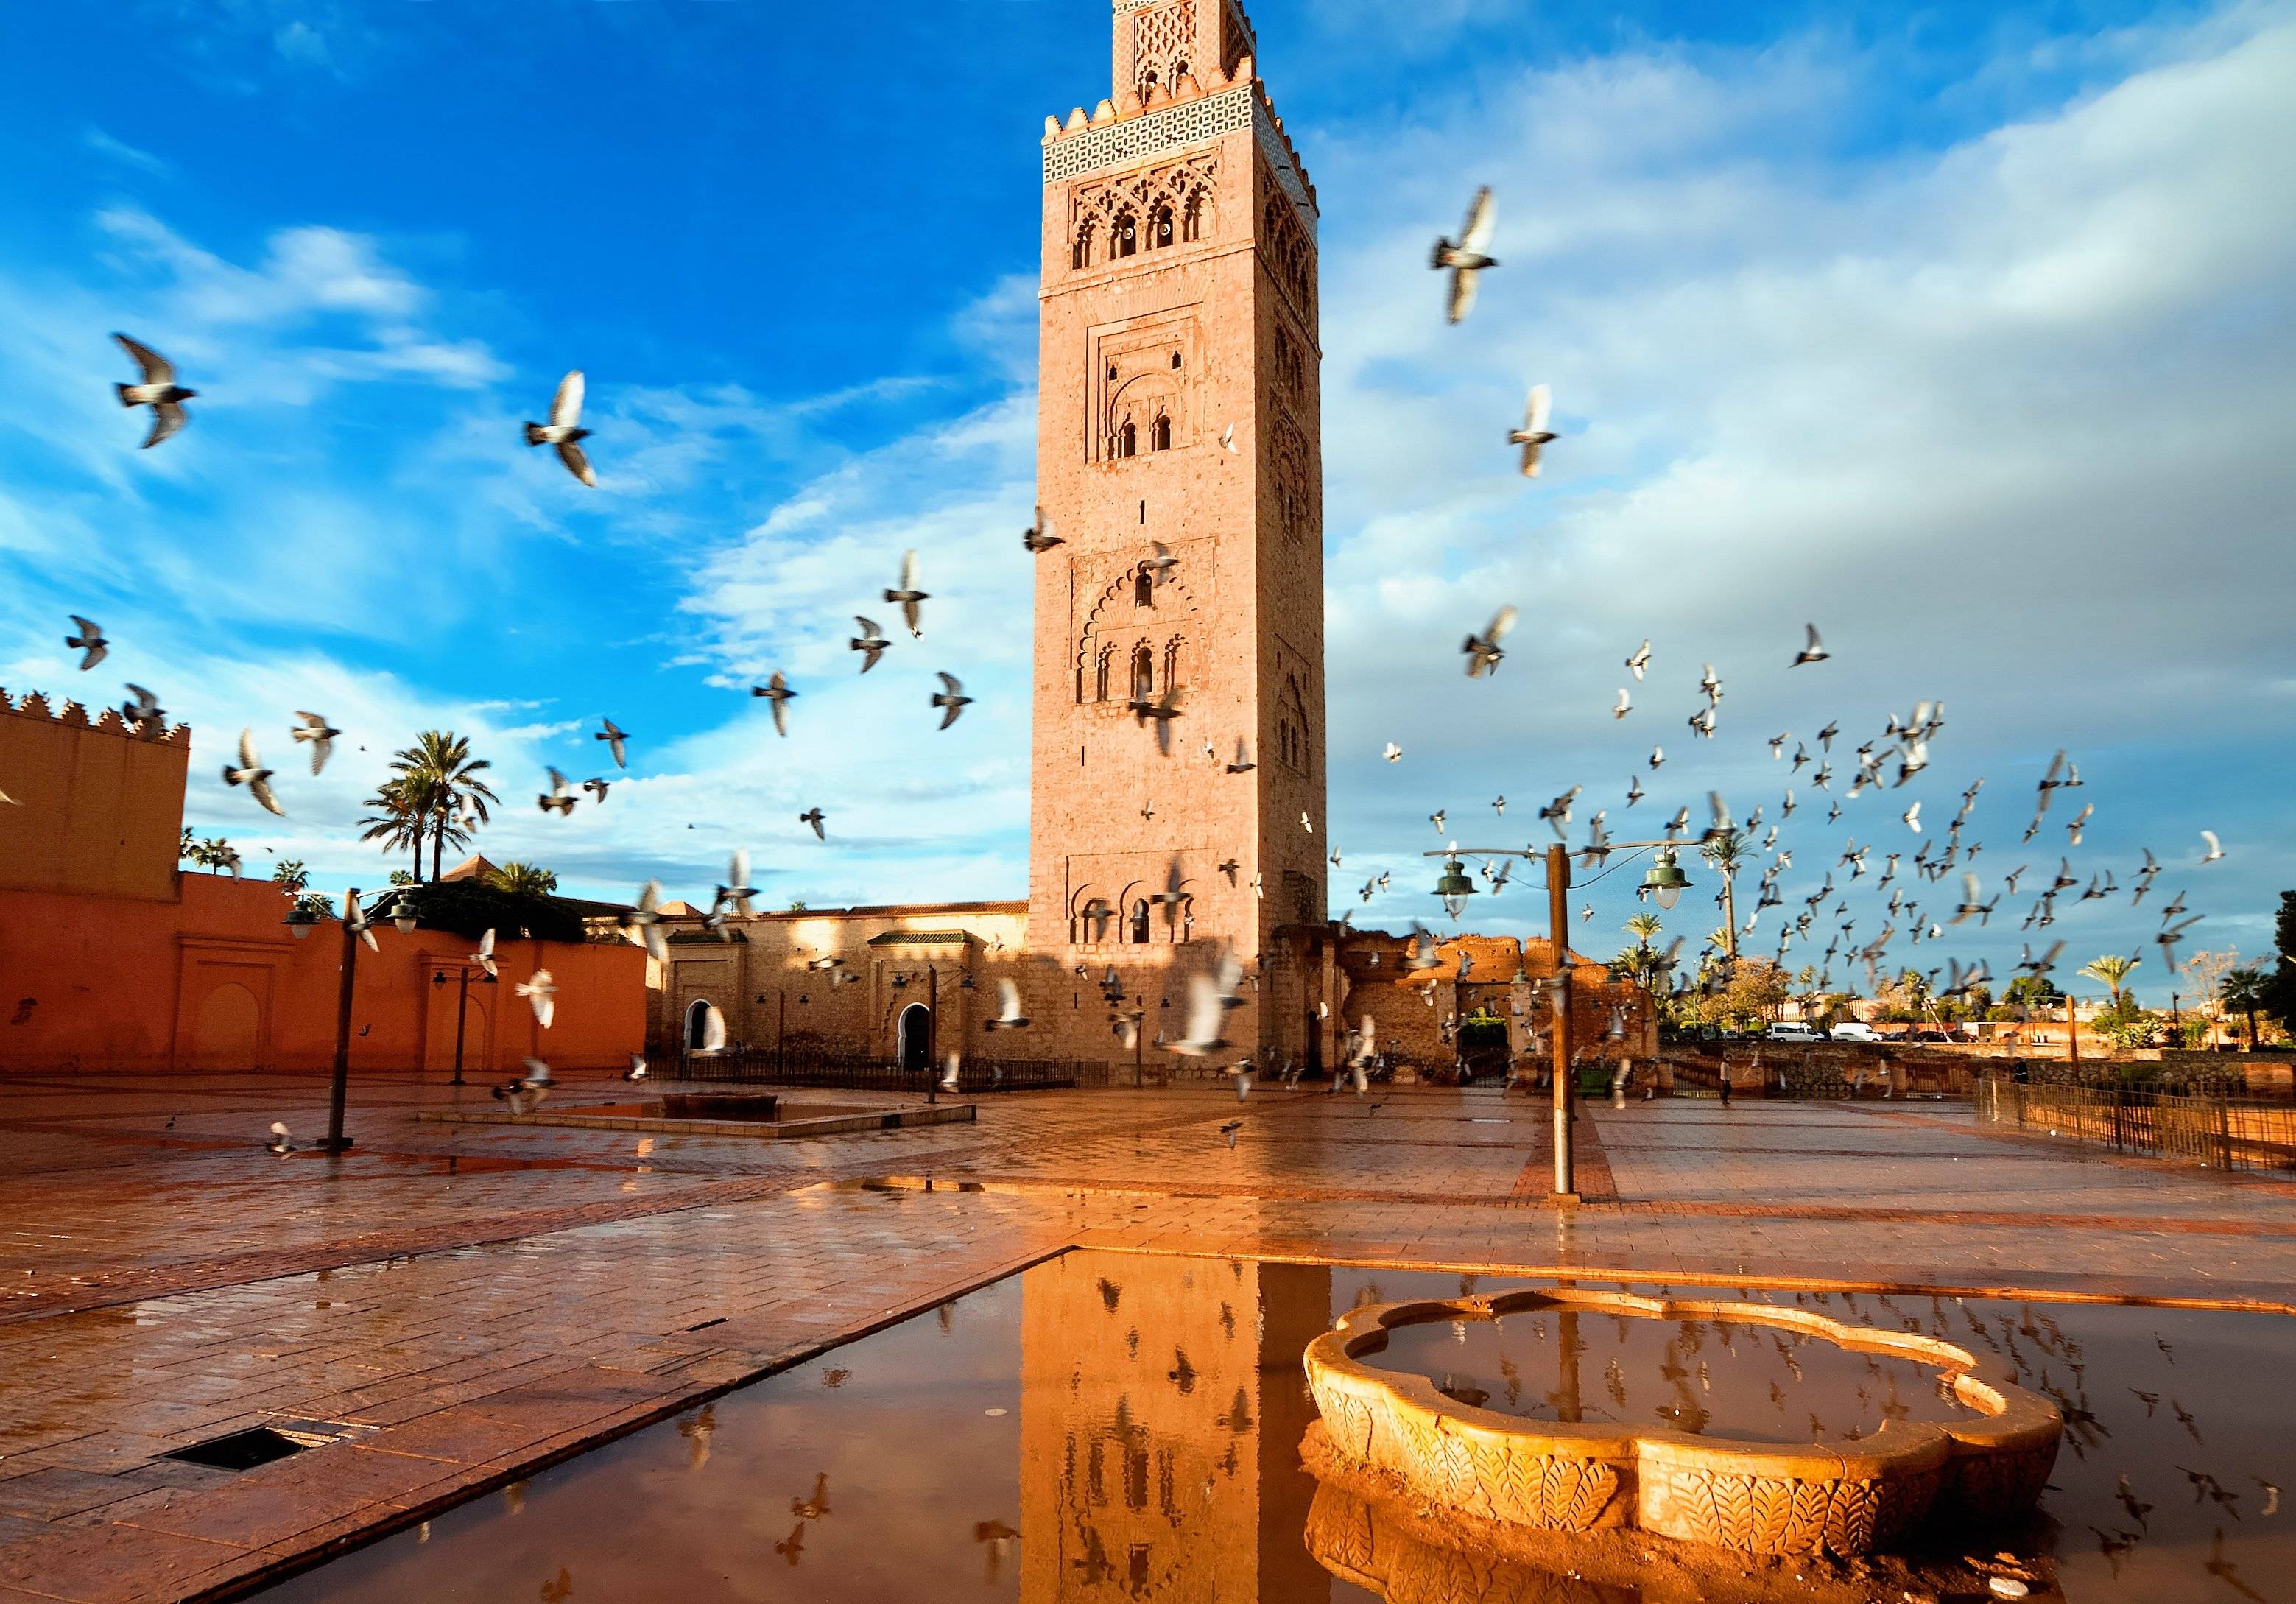 Amore a prima vista: benvenuti a Marrakech!